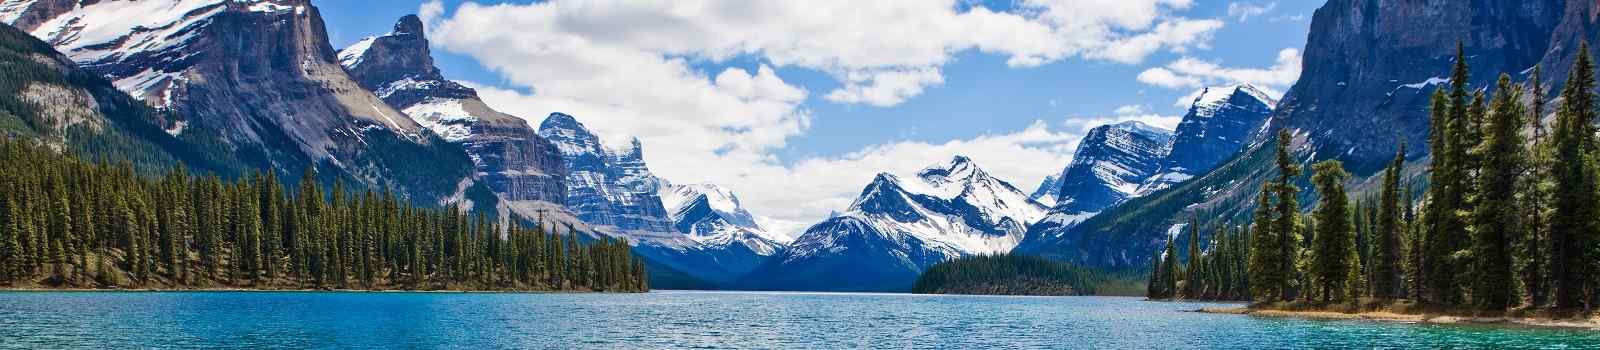 -Kanada Alberta jasper national park 46772335